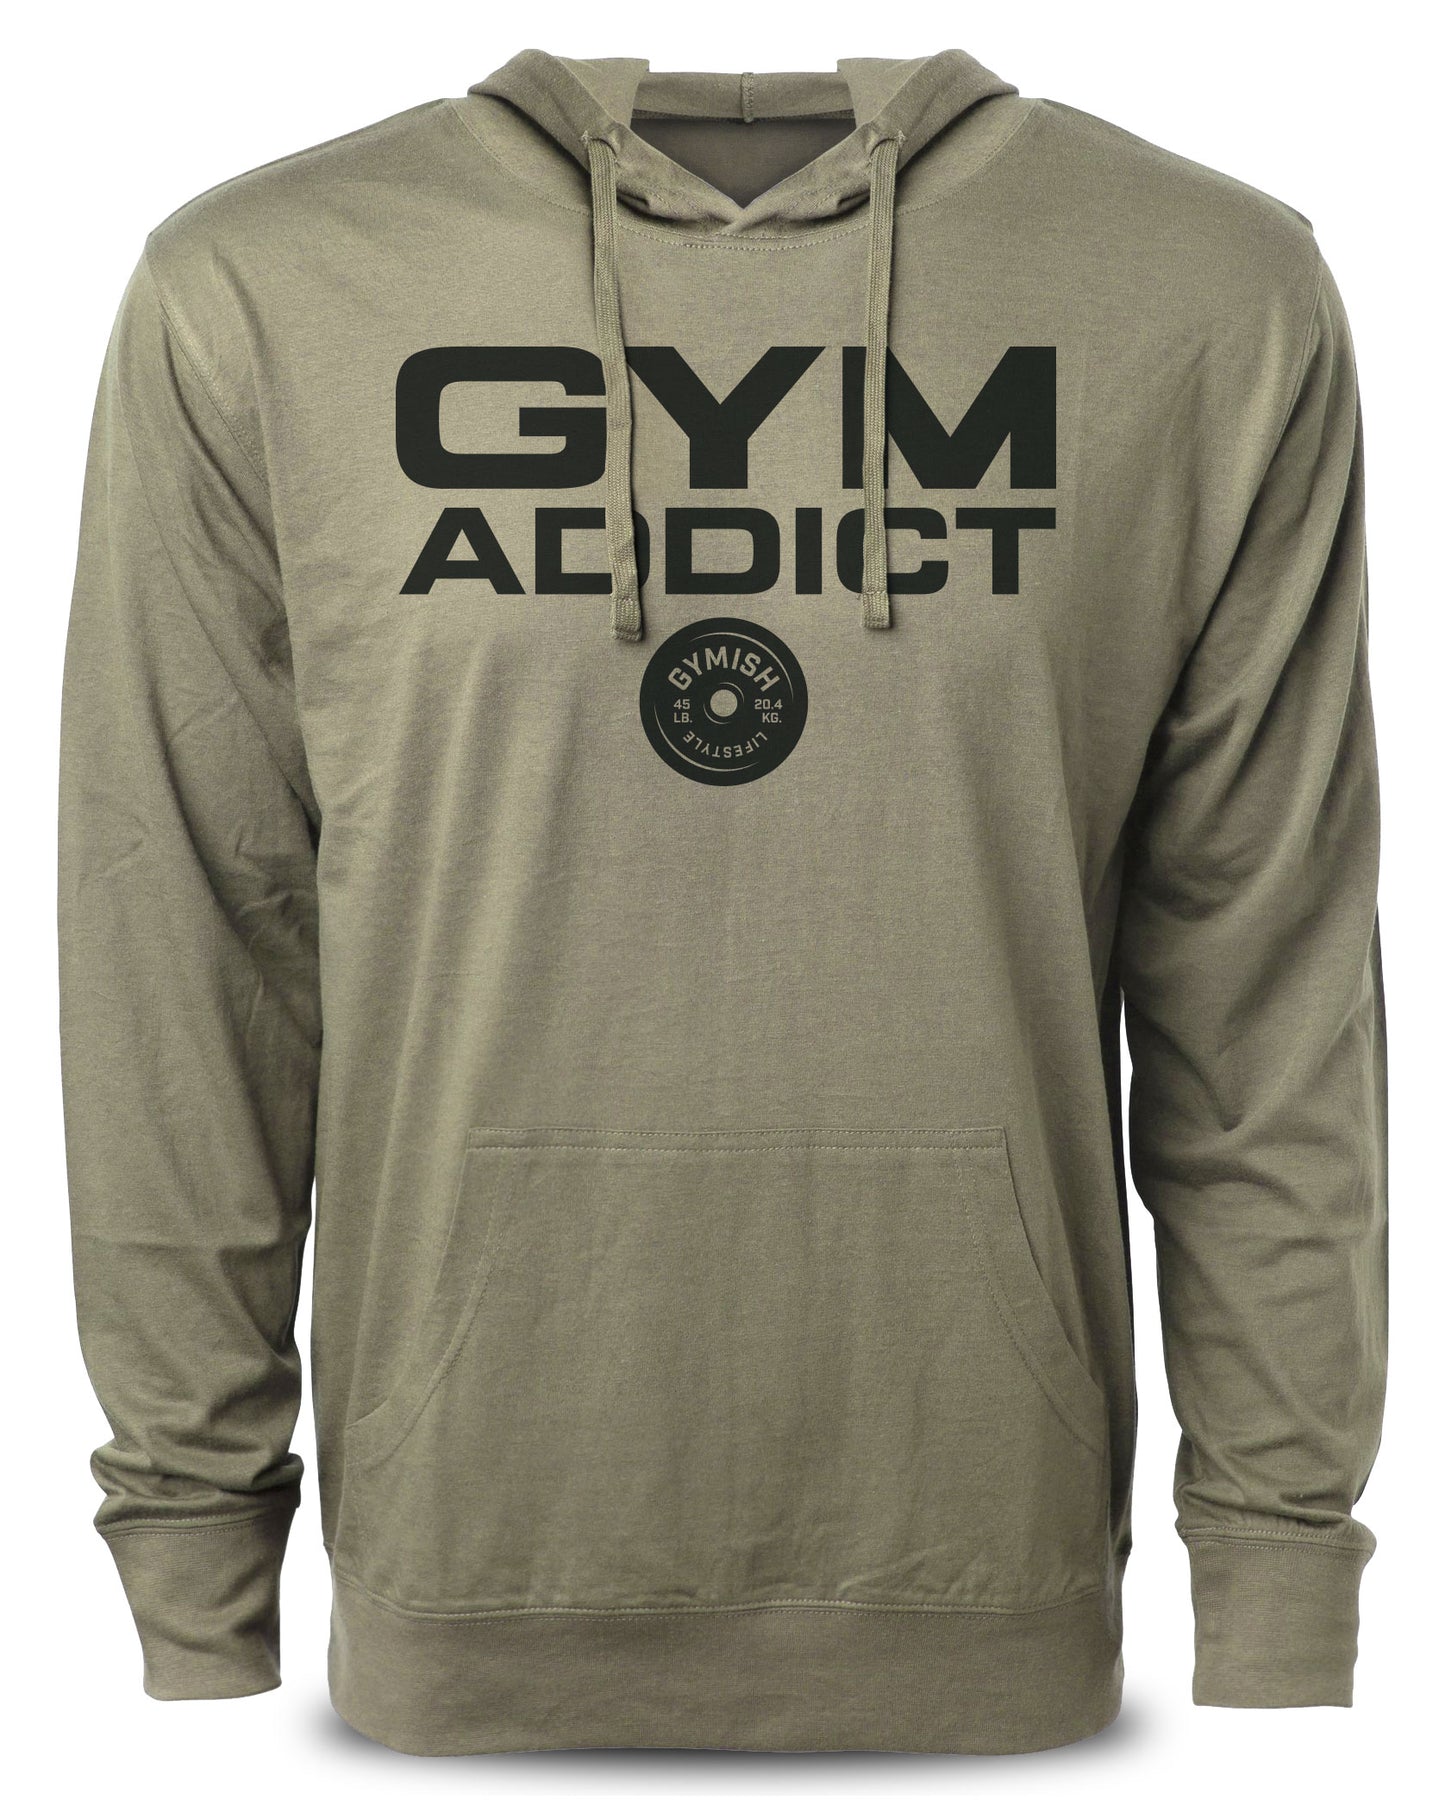 Iron Gym Addict Workout Hoodies Funny Hoodies Gym Sweatshirt Lifting Pullover